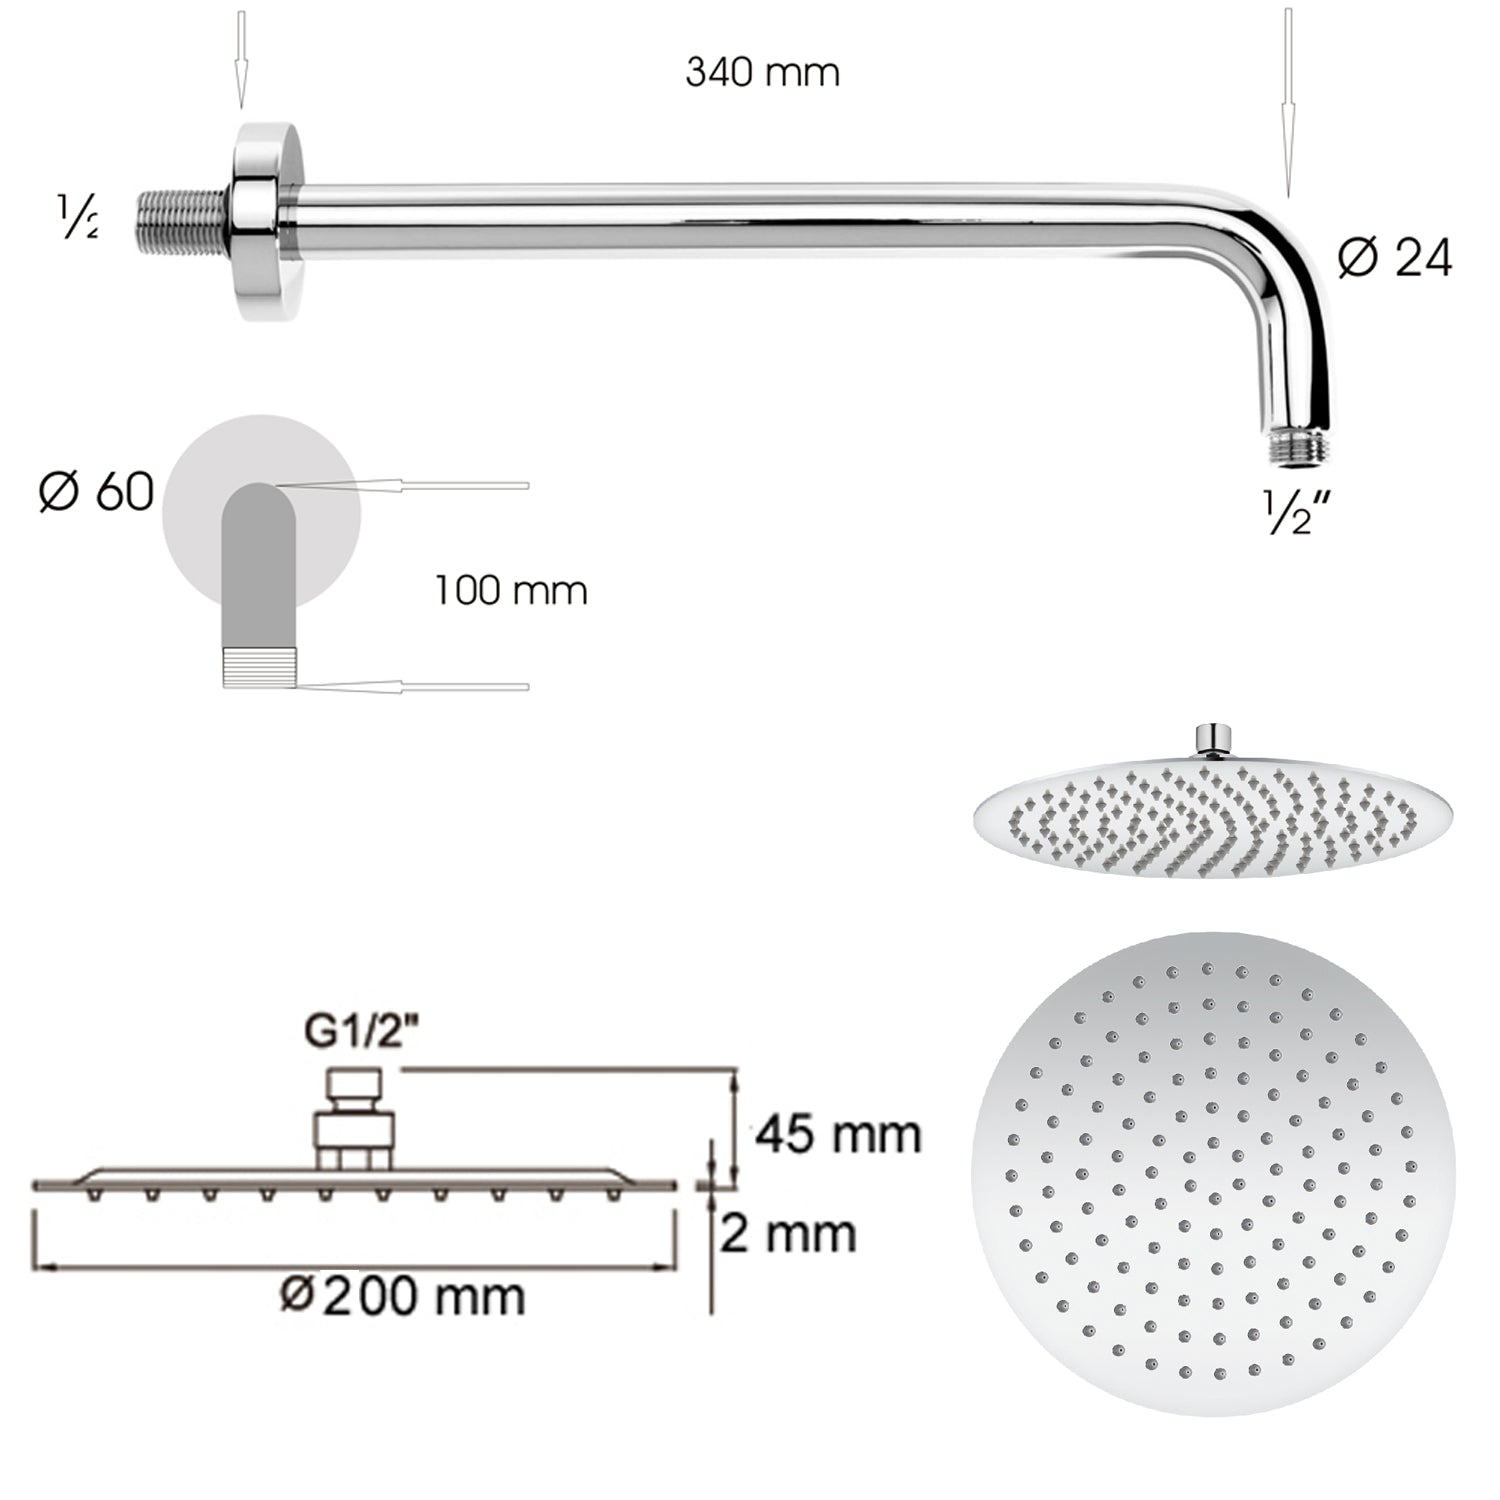 Soffione doccia Ares tondo ultraslim diametro 20 cm con braccio doccia 